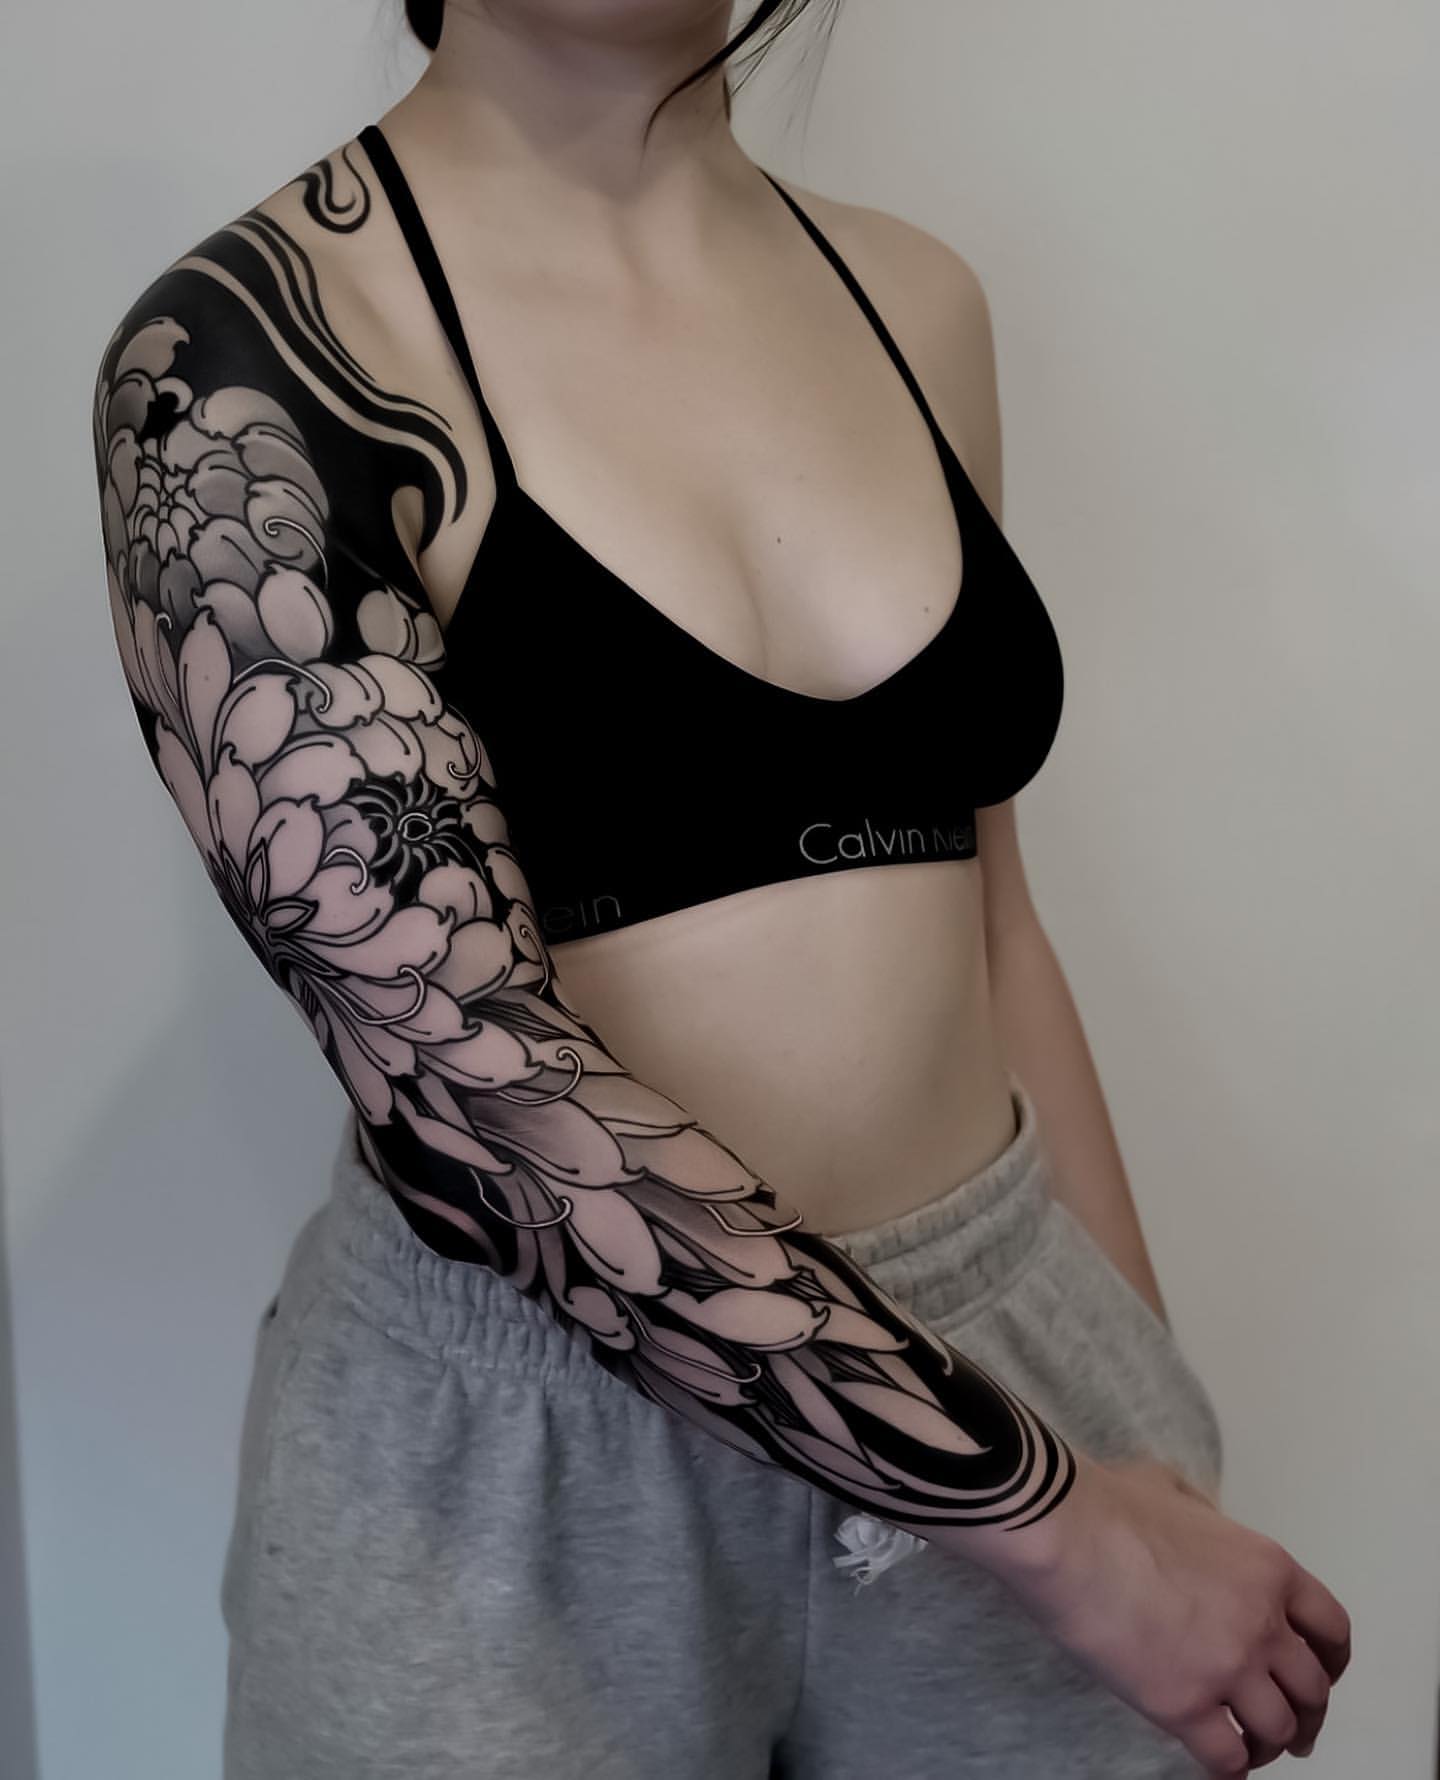 Chrysanthemum Tattoo Ideas 2